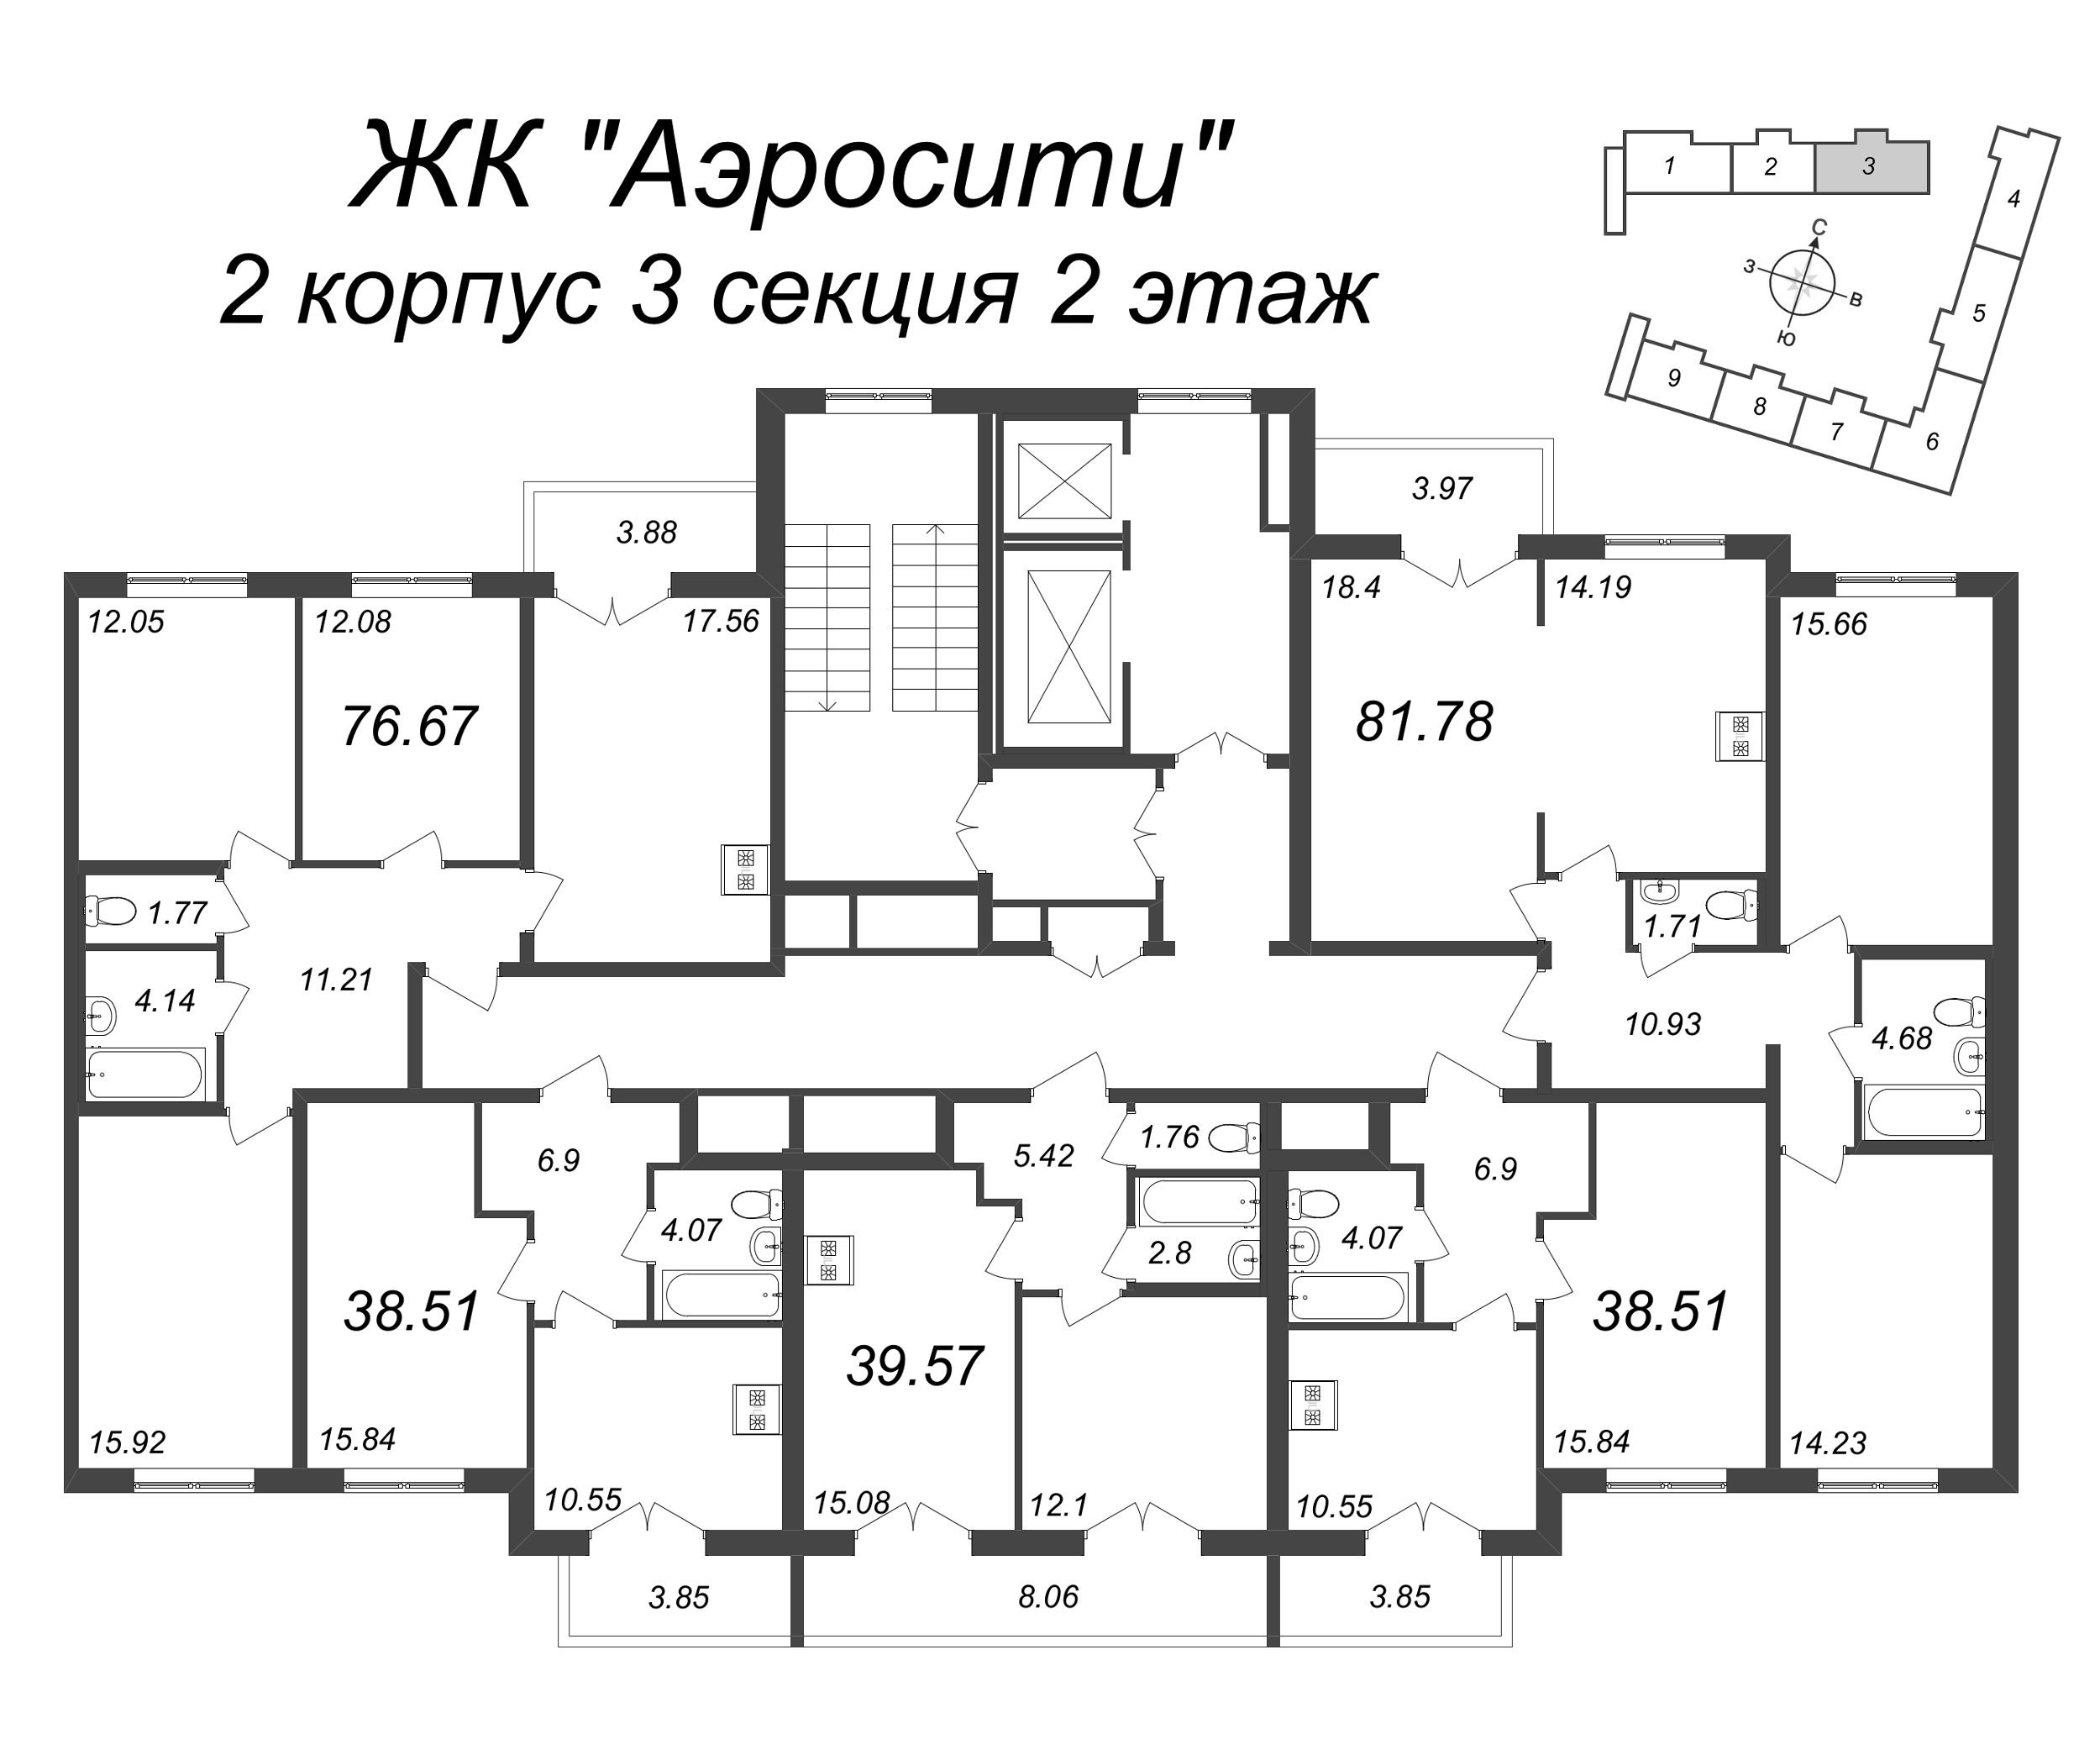 4-комнатная (Евро) квартира, 81.78 м² - планировка этажа